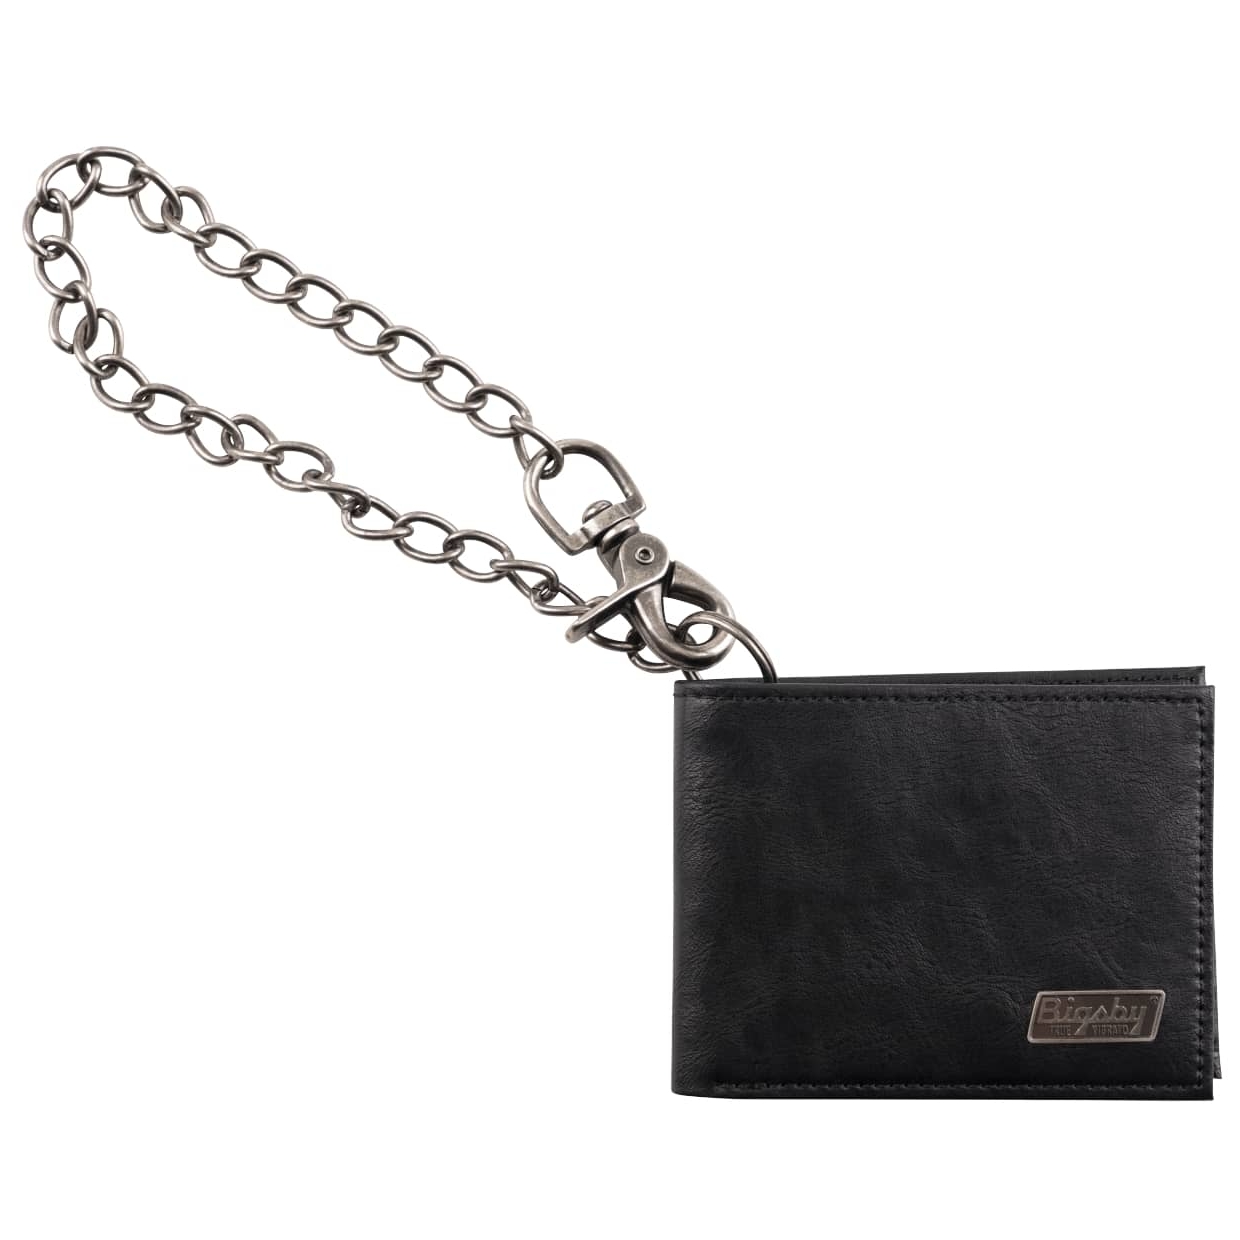 Bigsby Leather Wallet LTD w/ Chain